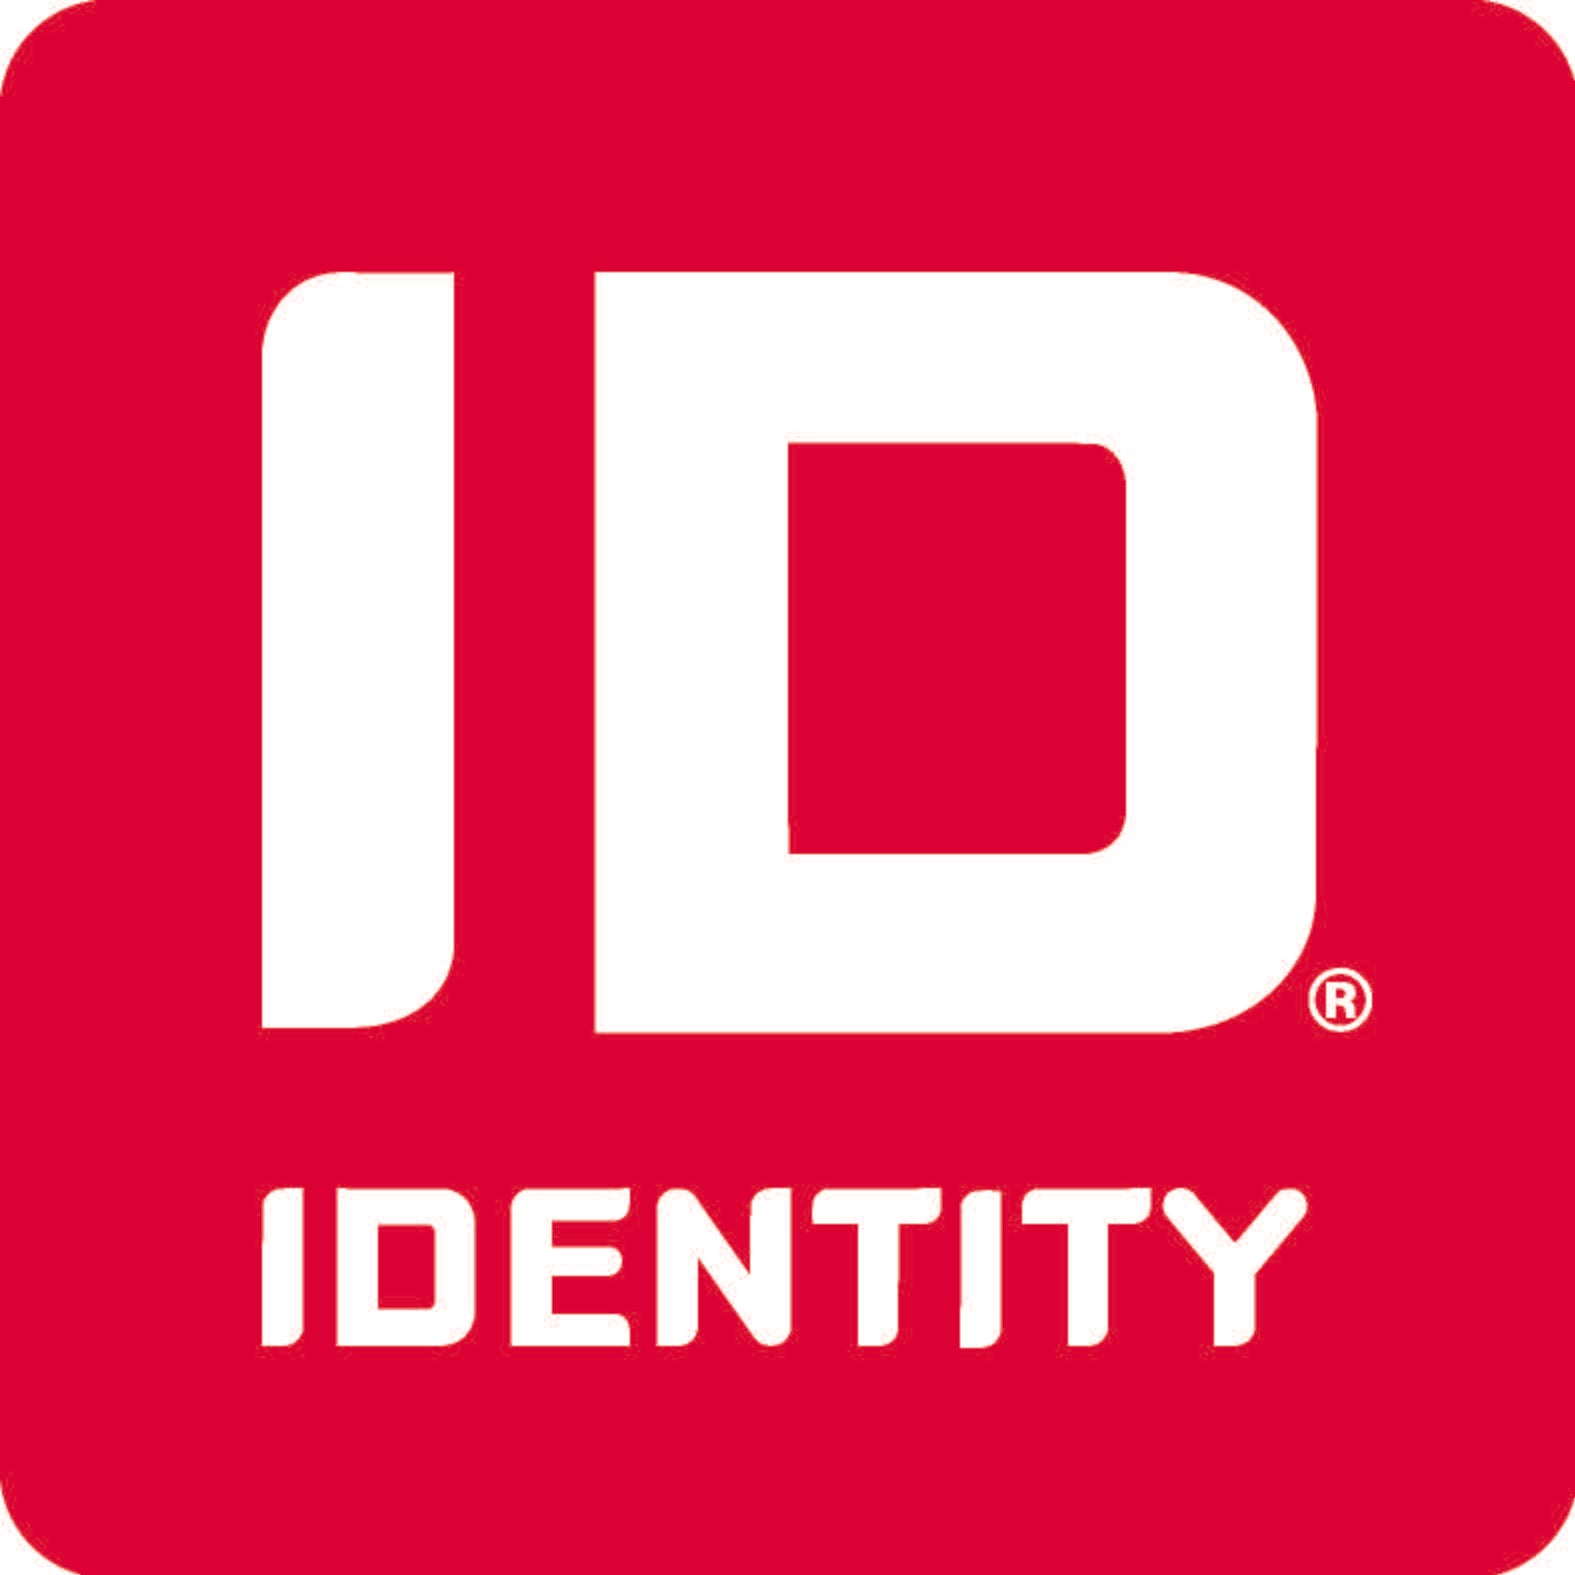 Print Core: ID IDENTITY Logo